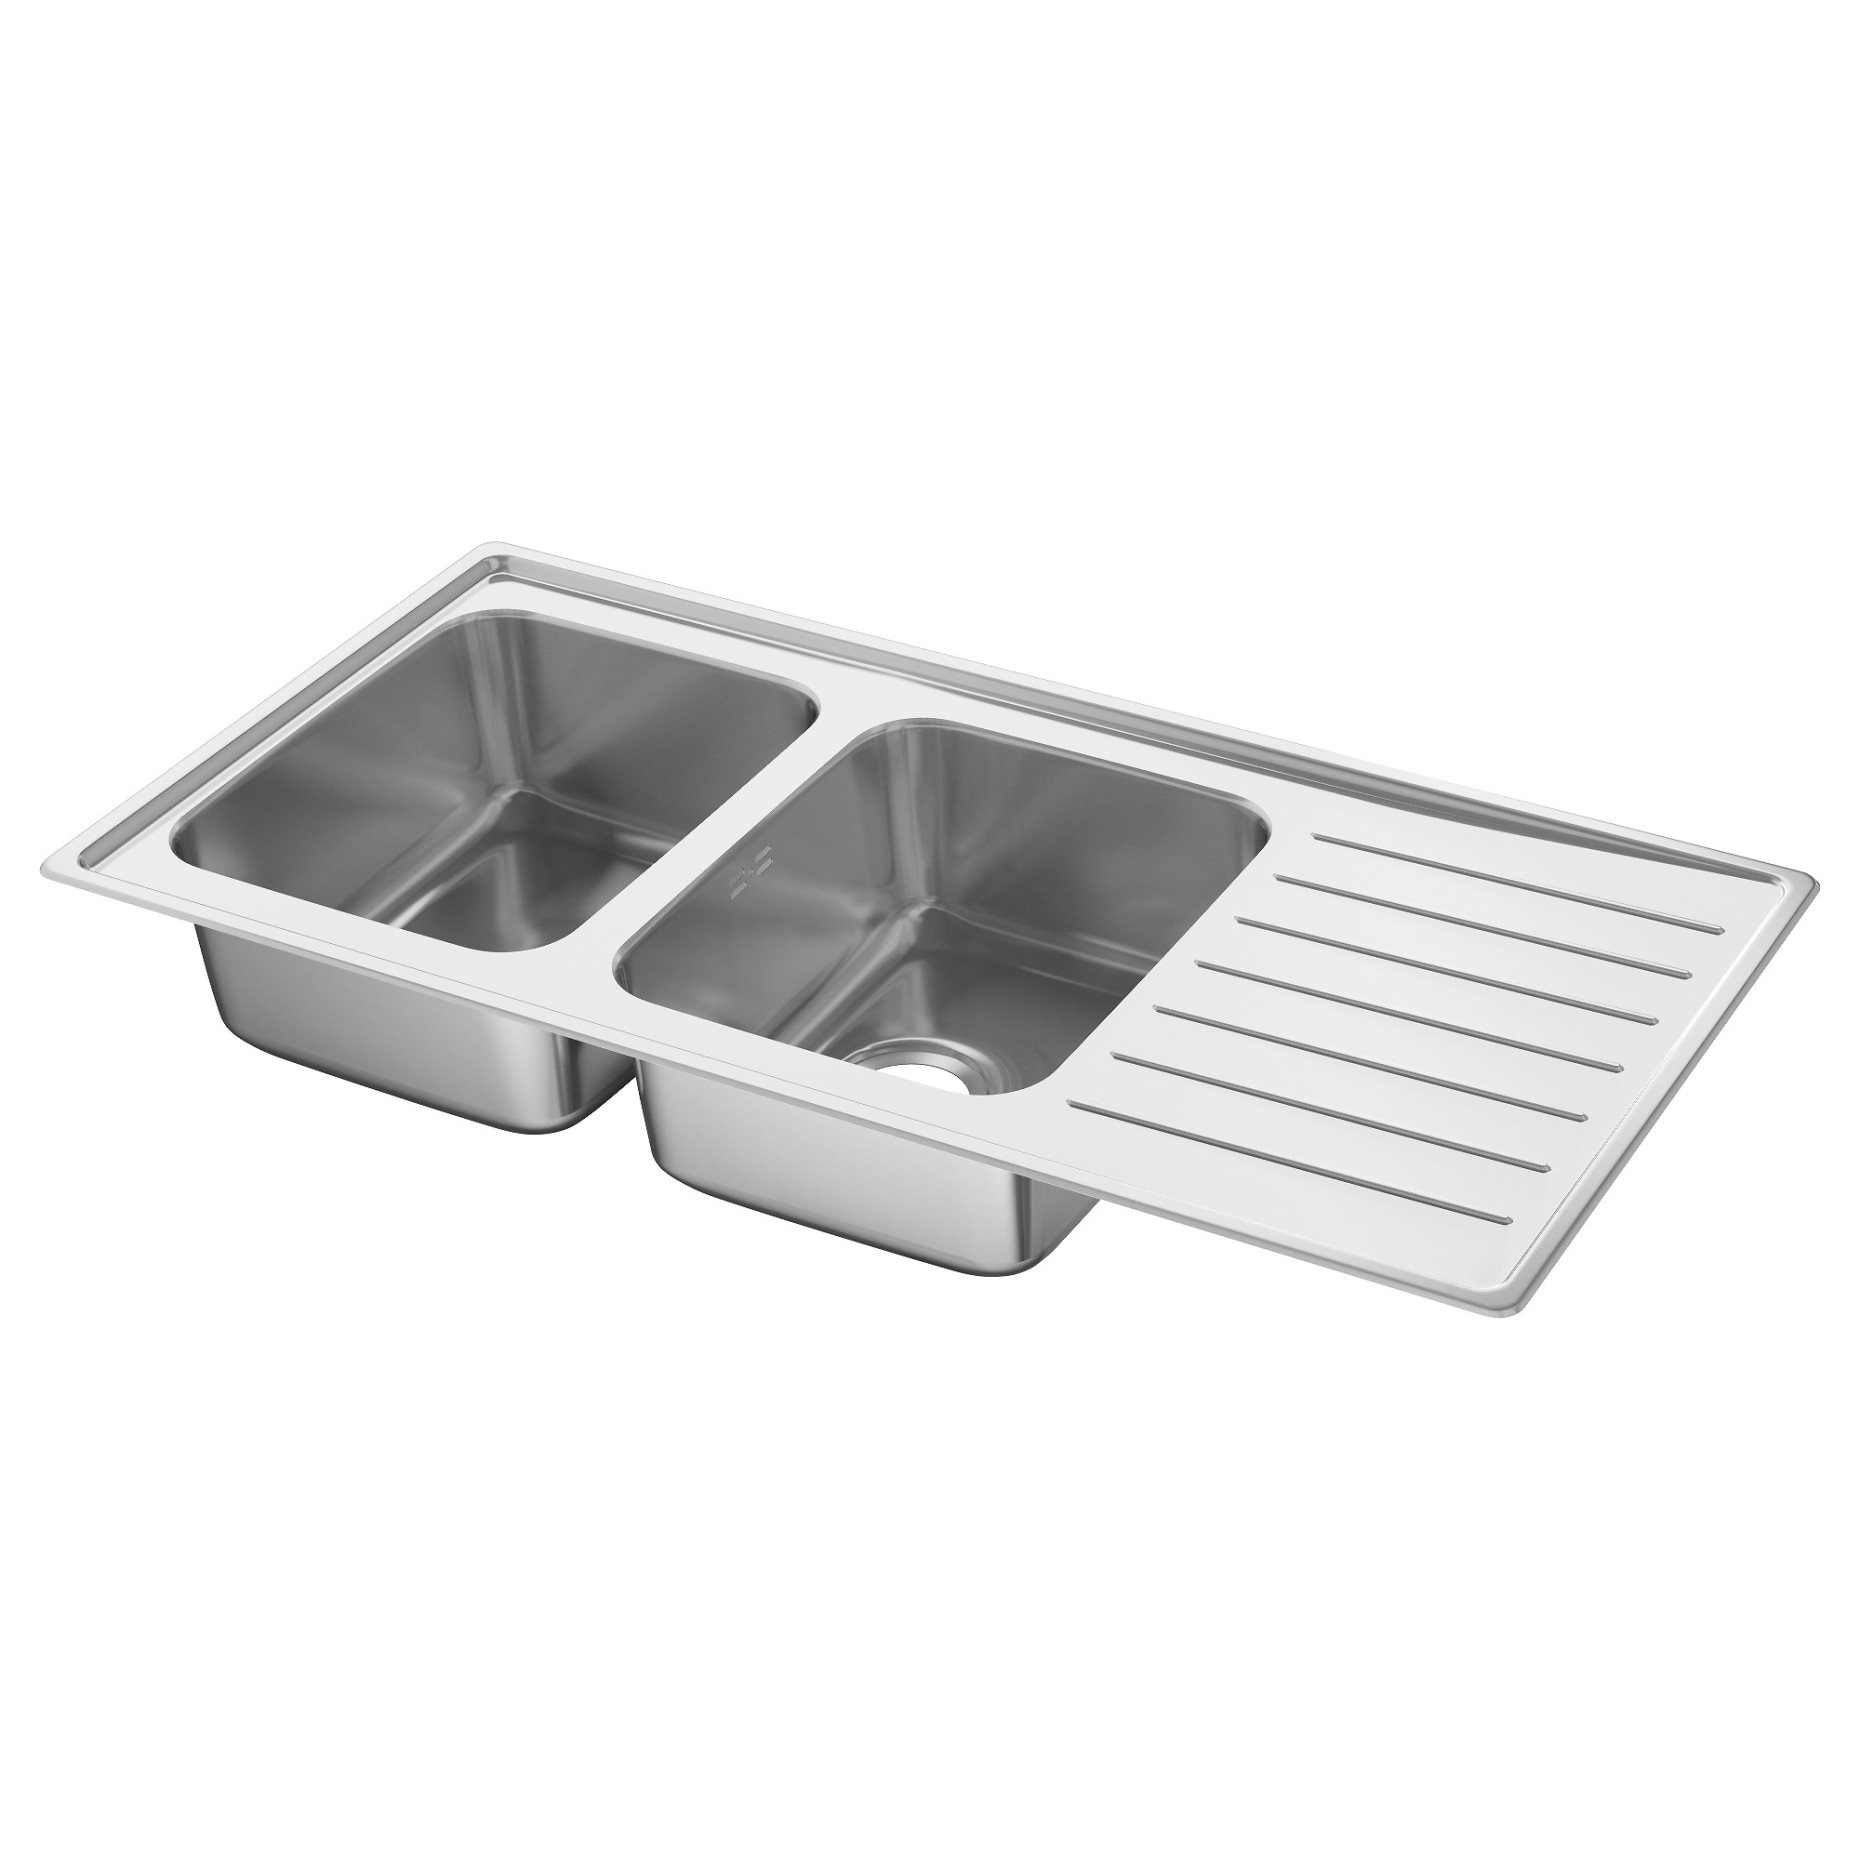 VATTUDALEN, inset sink, 2 bowls with drainboard, 503.151.68